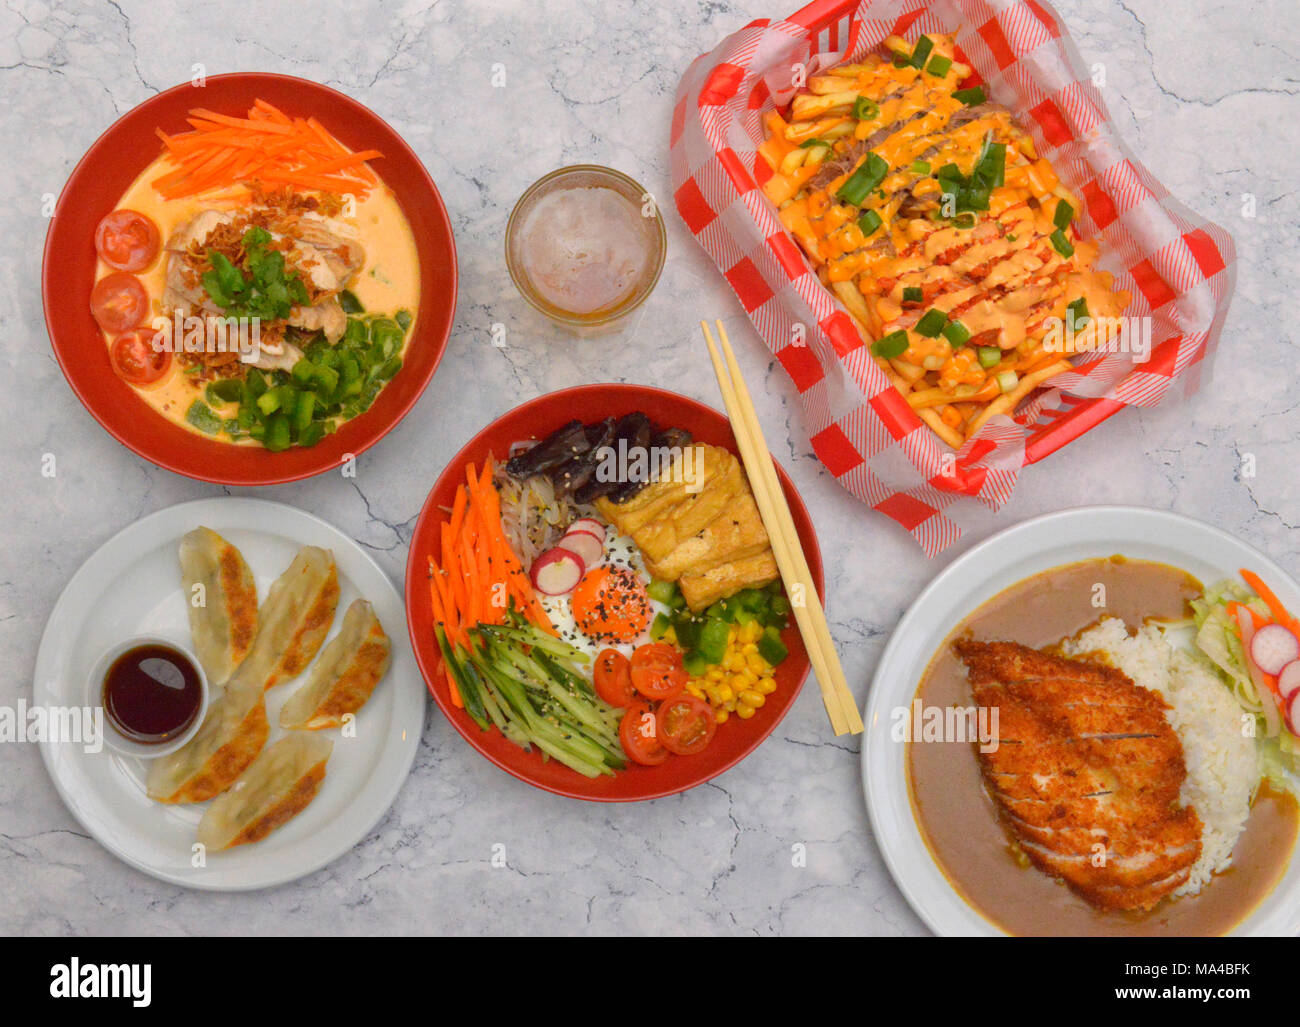 A selection of Korean food including tofu & mushroom bimbimbap, beef kimchi, chicken red curry, vegetable dumplings, crispy panko chicken katsu curry. Stock Photo